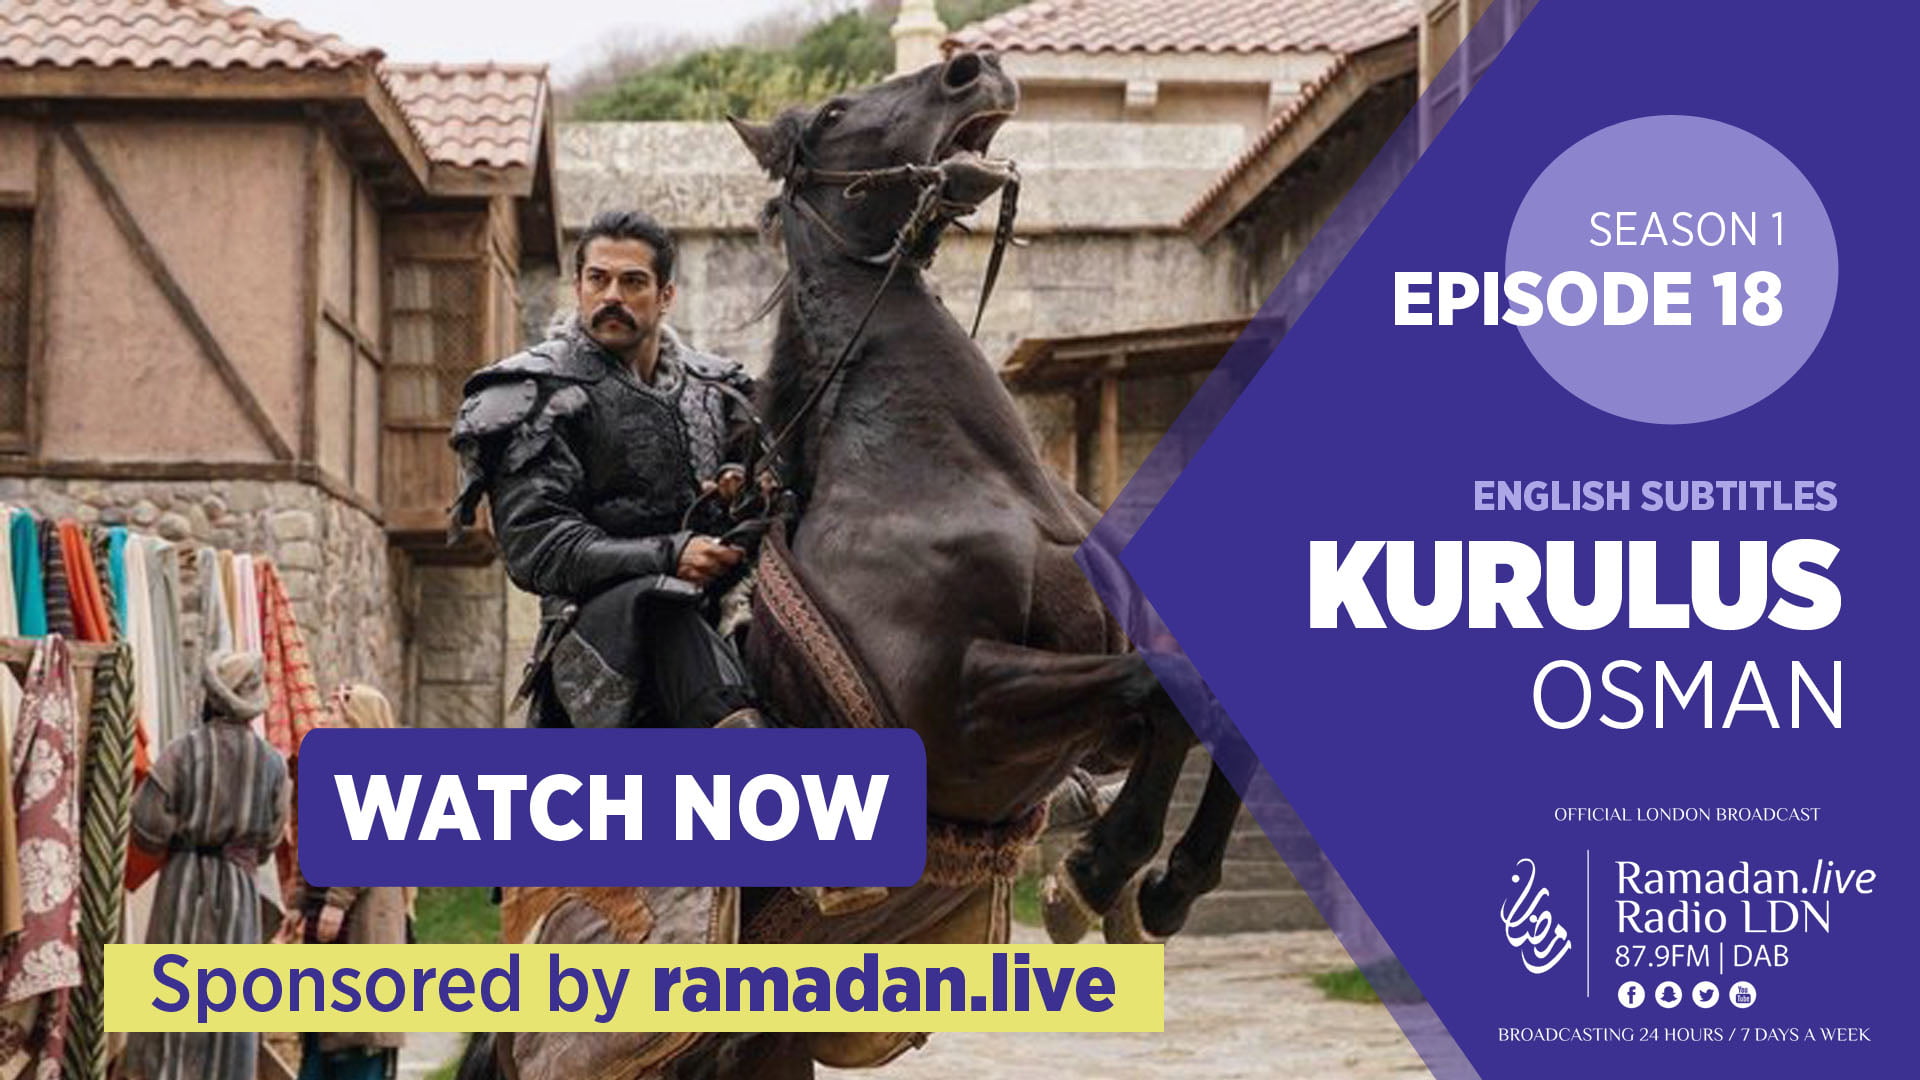 How to watch kurulus osman in english subtitles